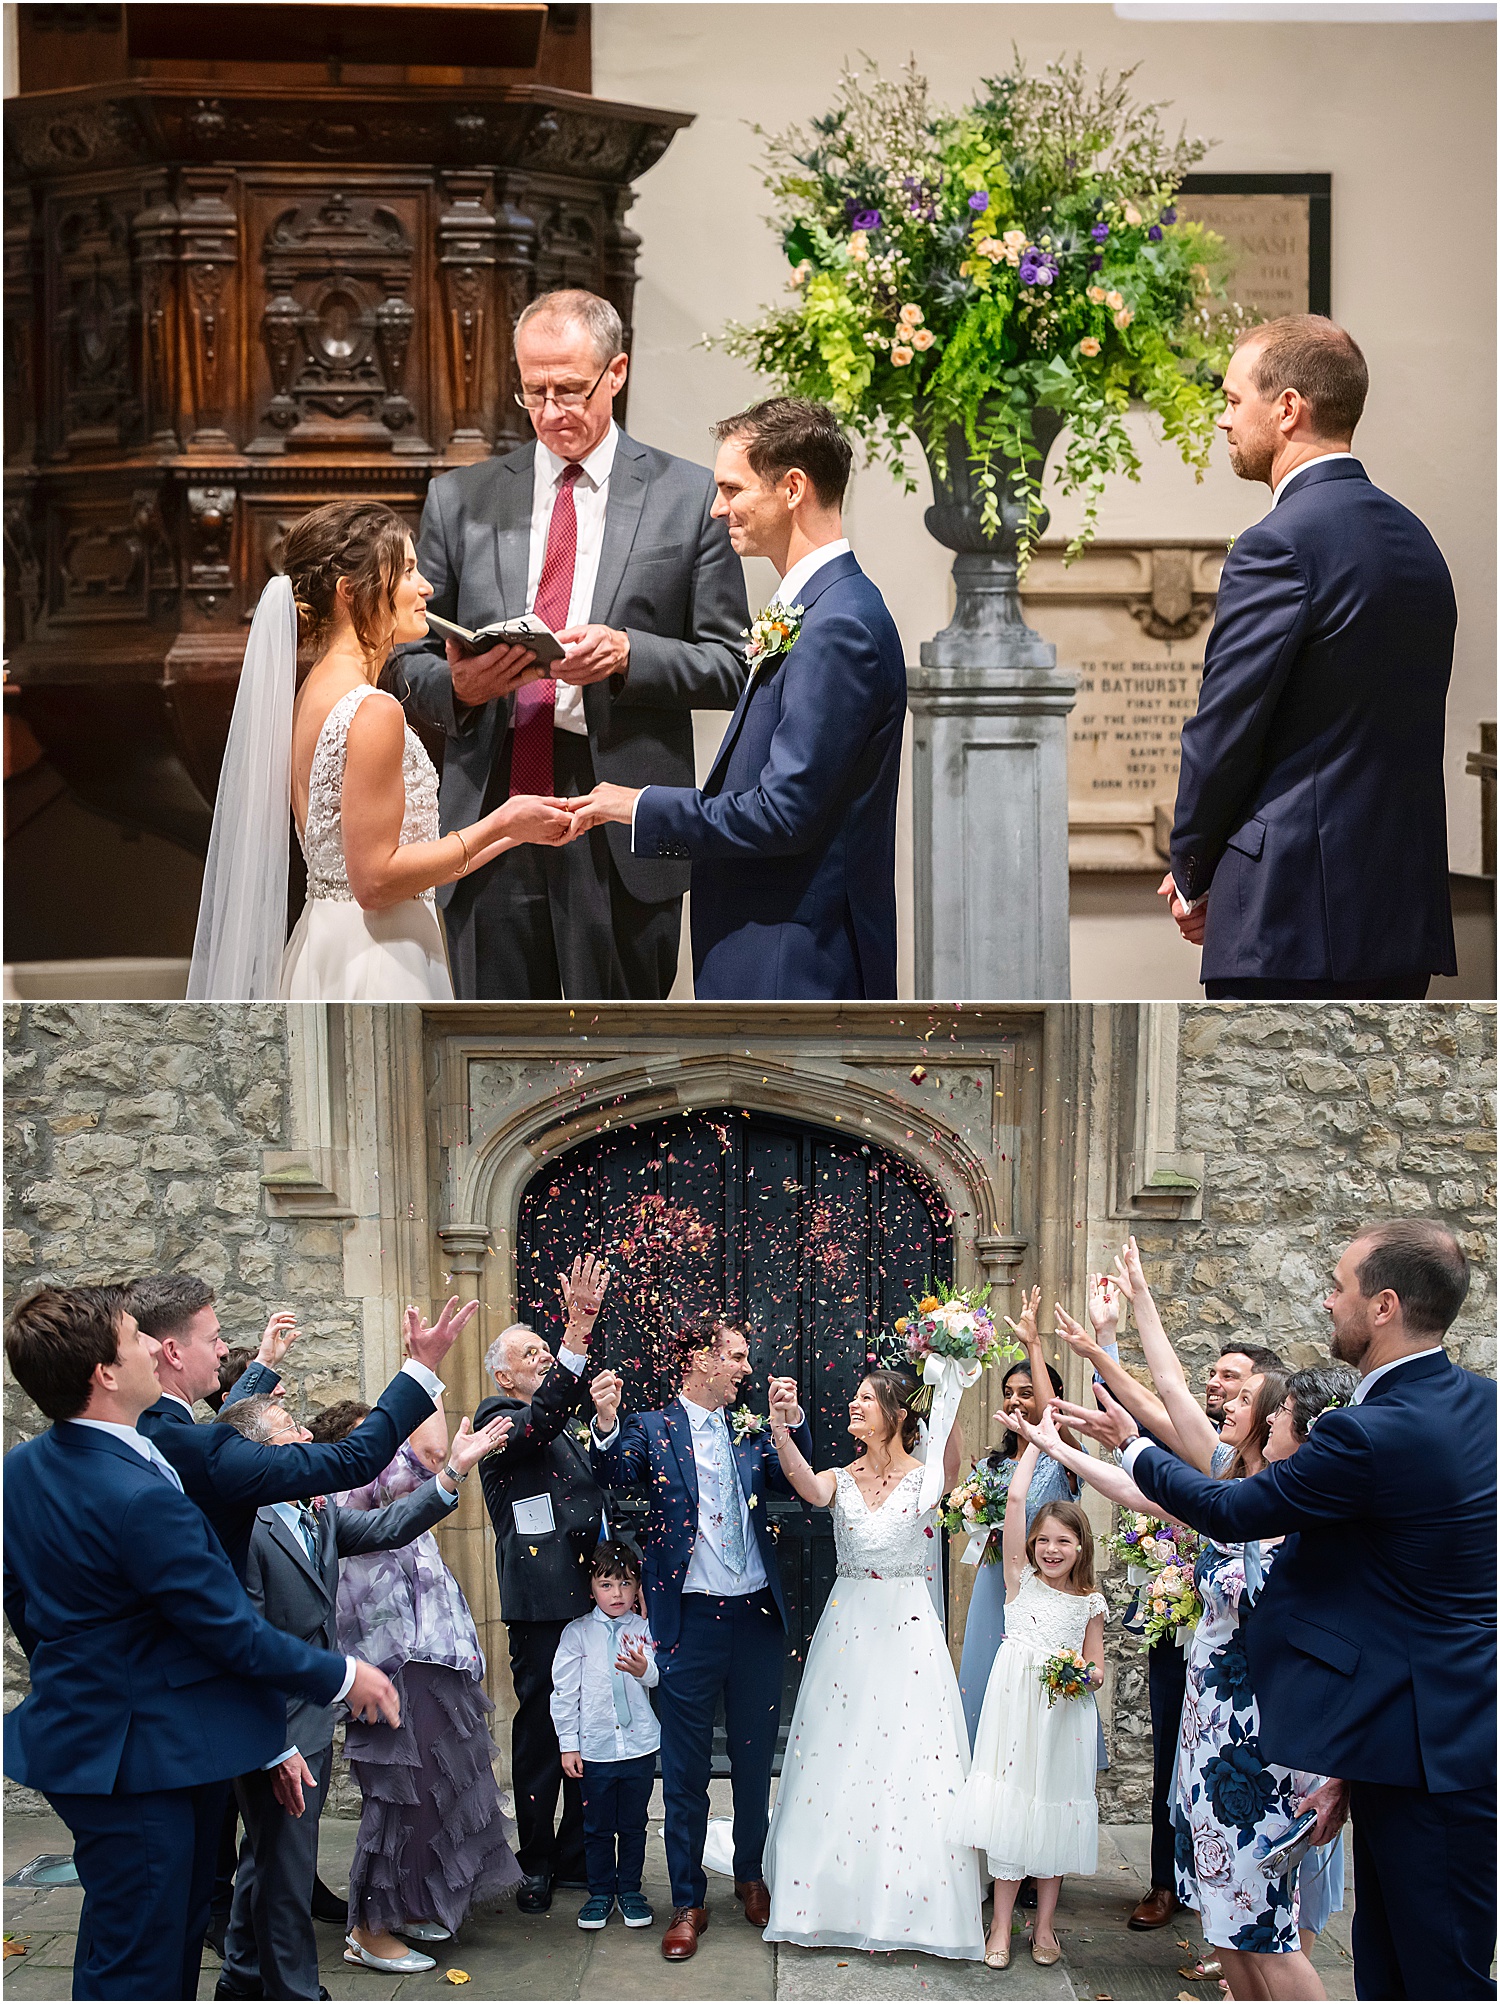 Rich-Jen-dusky-blue-pink-pastel-wedding-london-st-helens-bishopsgate-lily-sawyer-photo